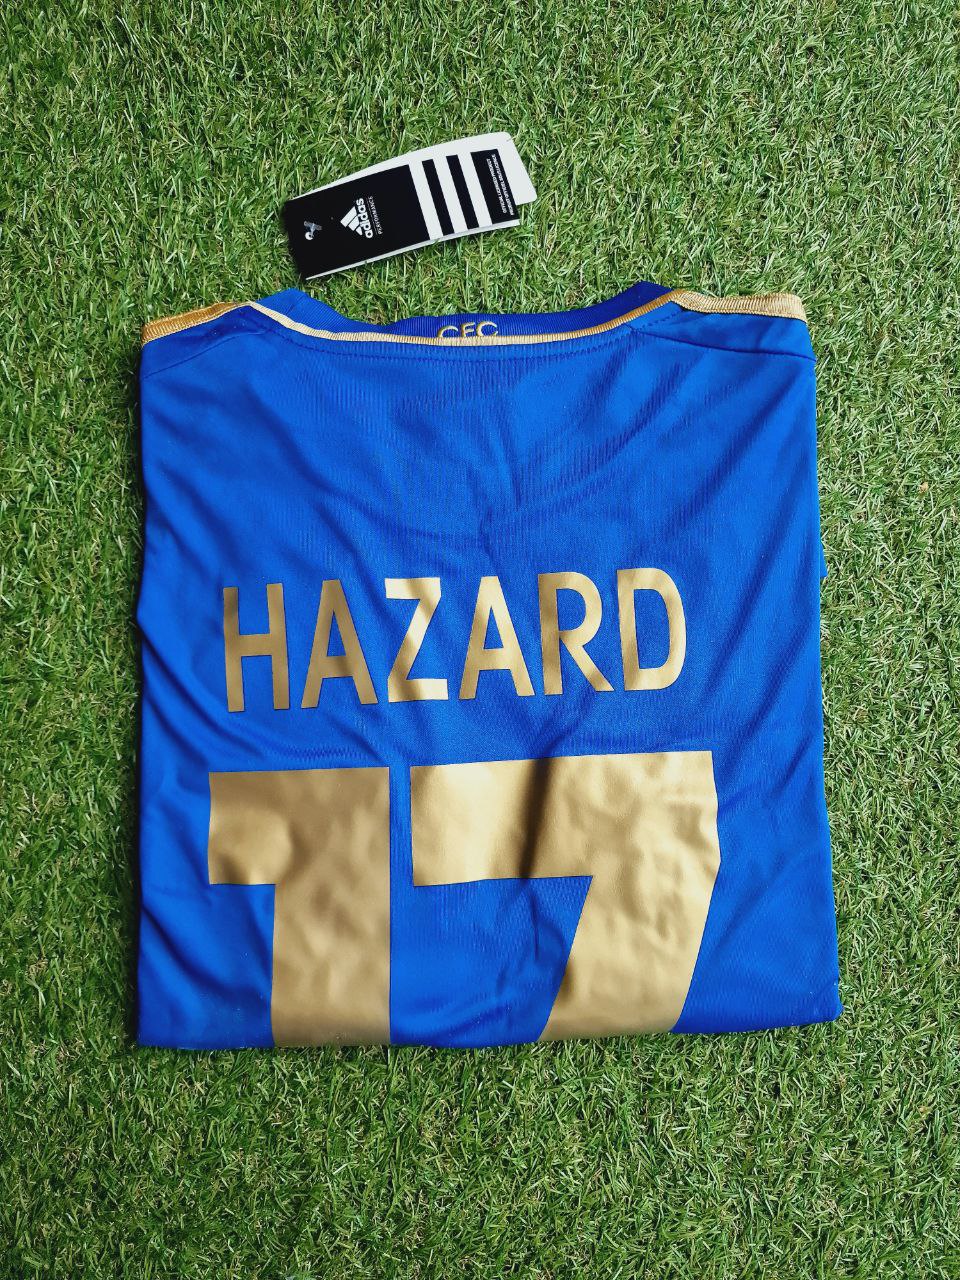 Eden Hazard Chelsea Blue Retro Football Jersey